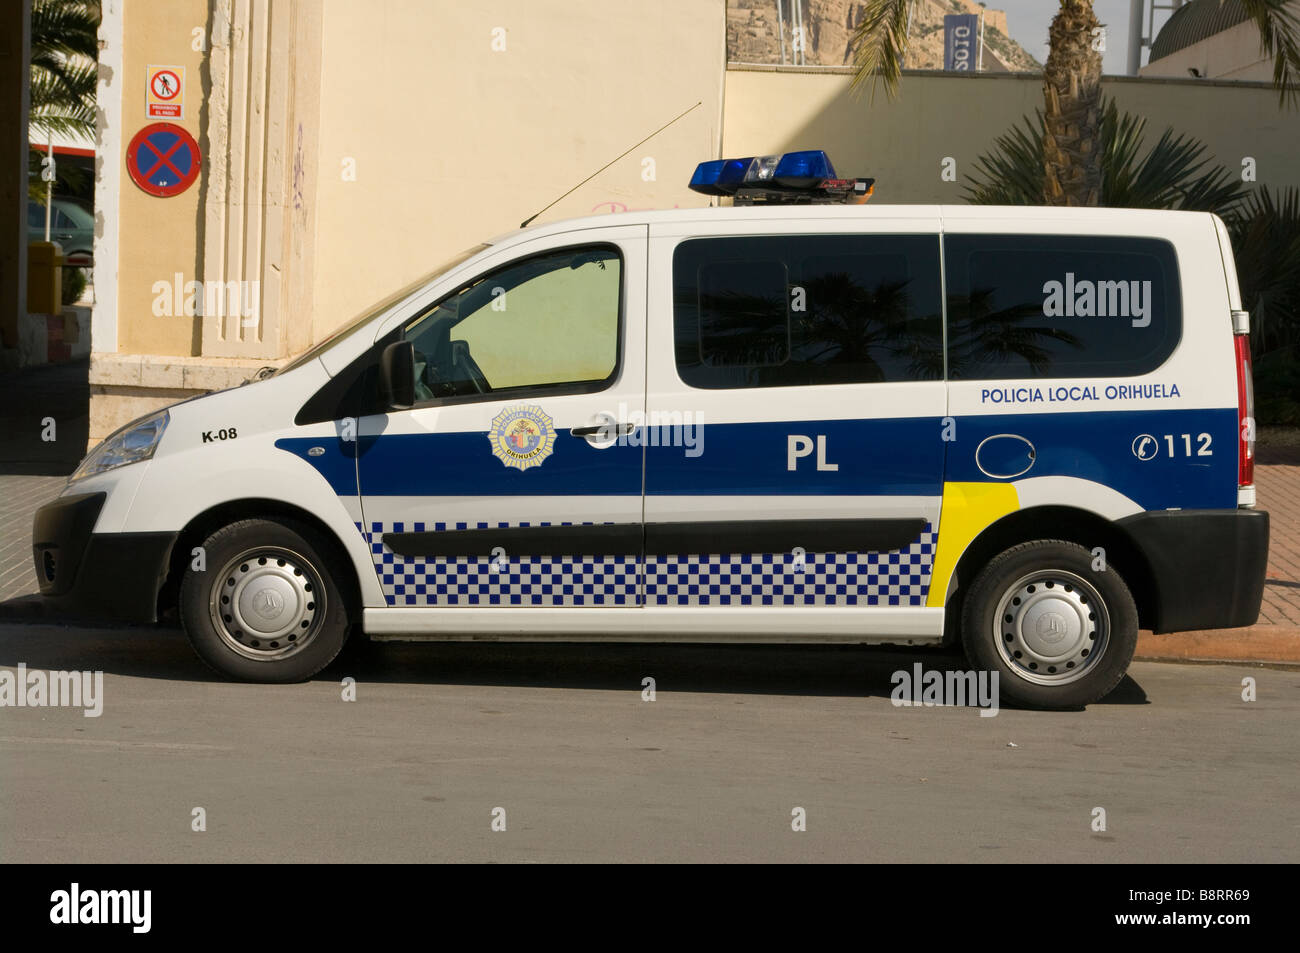 Policia Local Orihuela Policecar spanish Police Car Spain Stock Photo